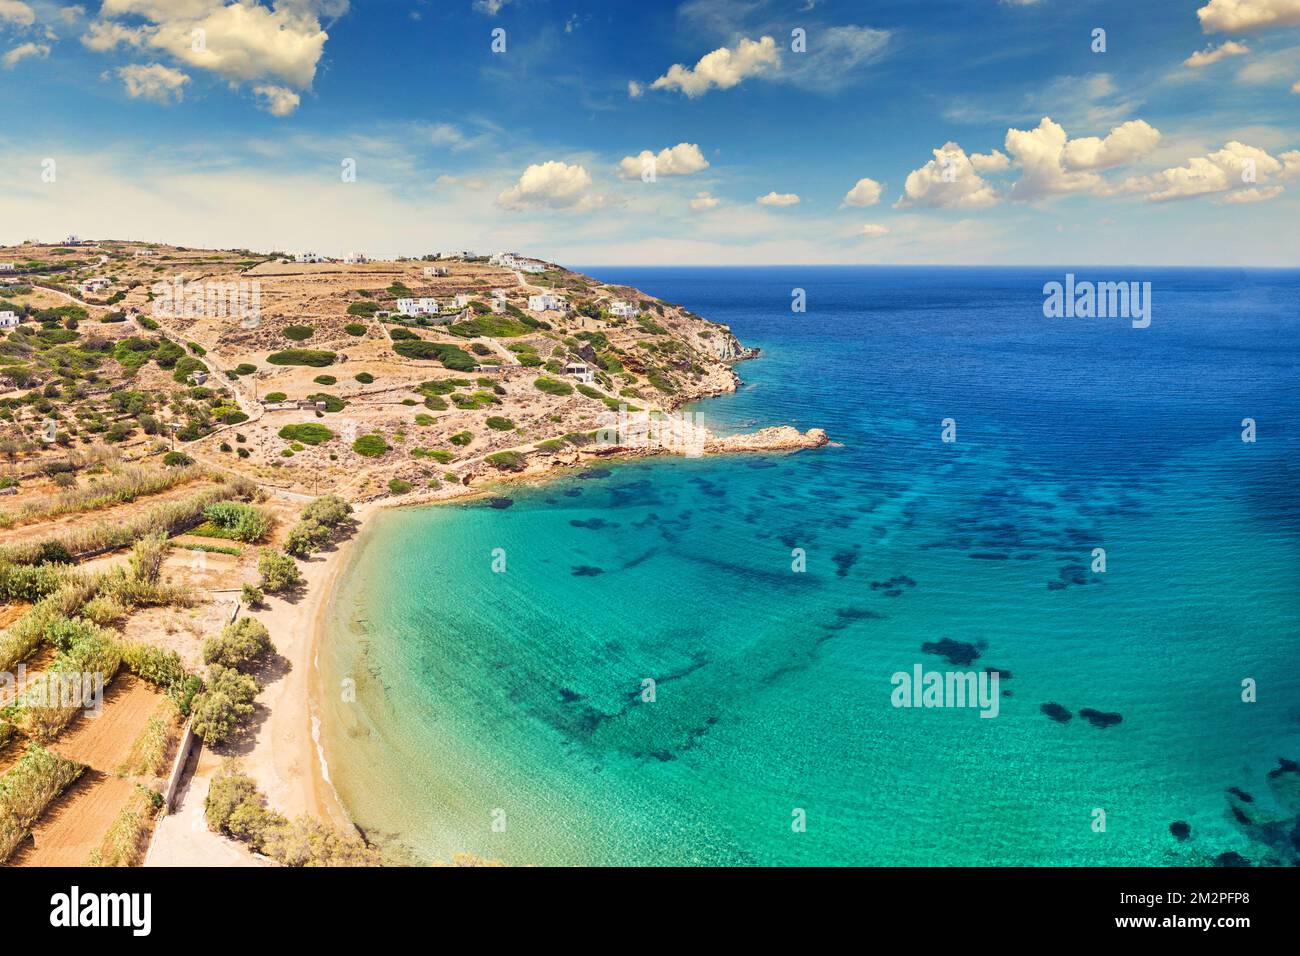 The sandy beach Lotos in Syros island, Greece Stock Photo